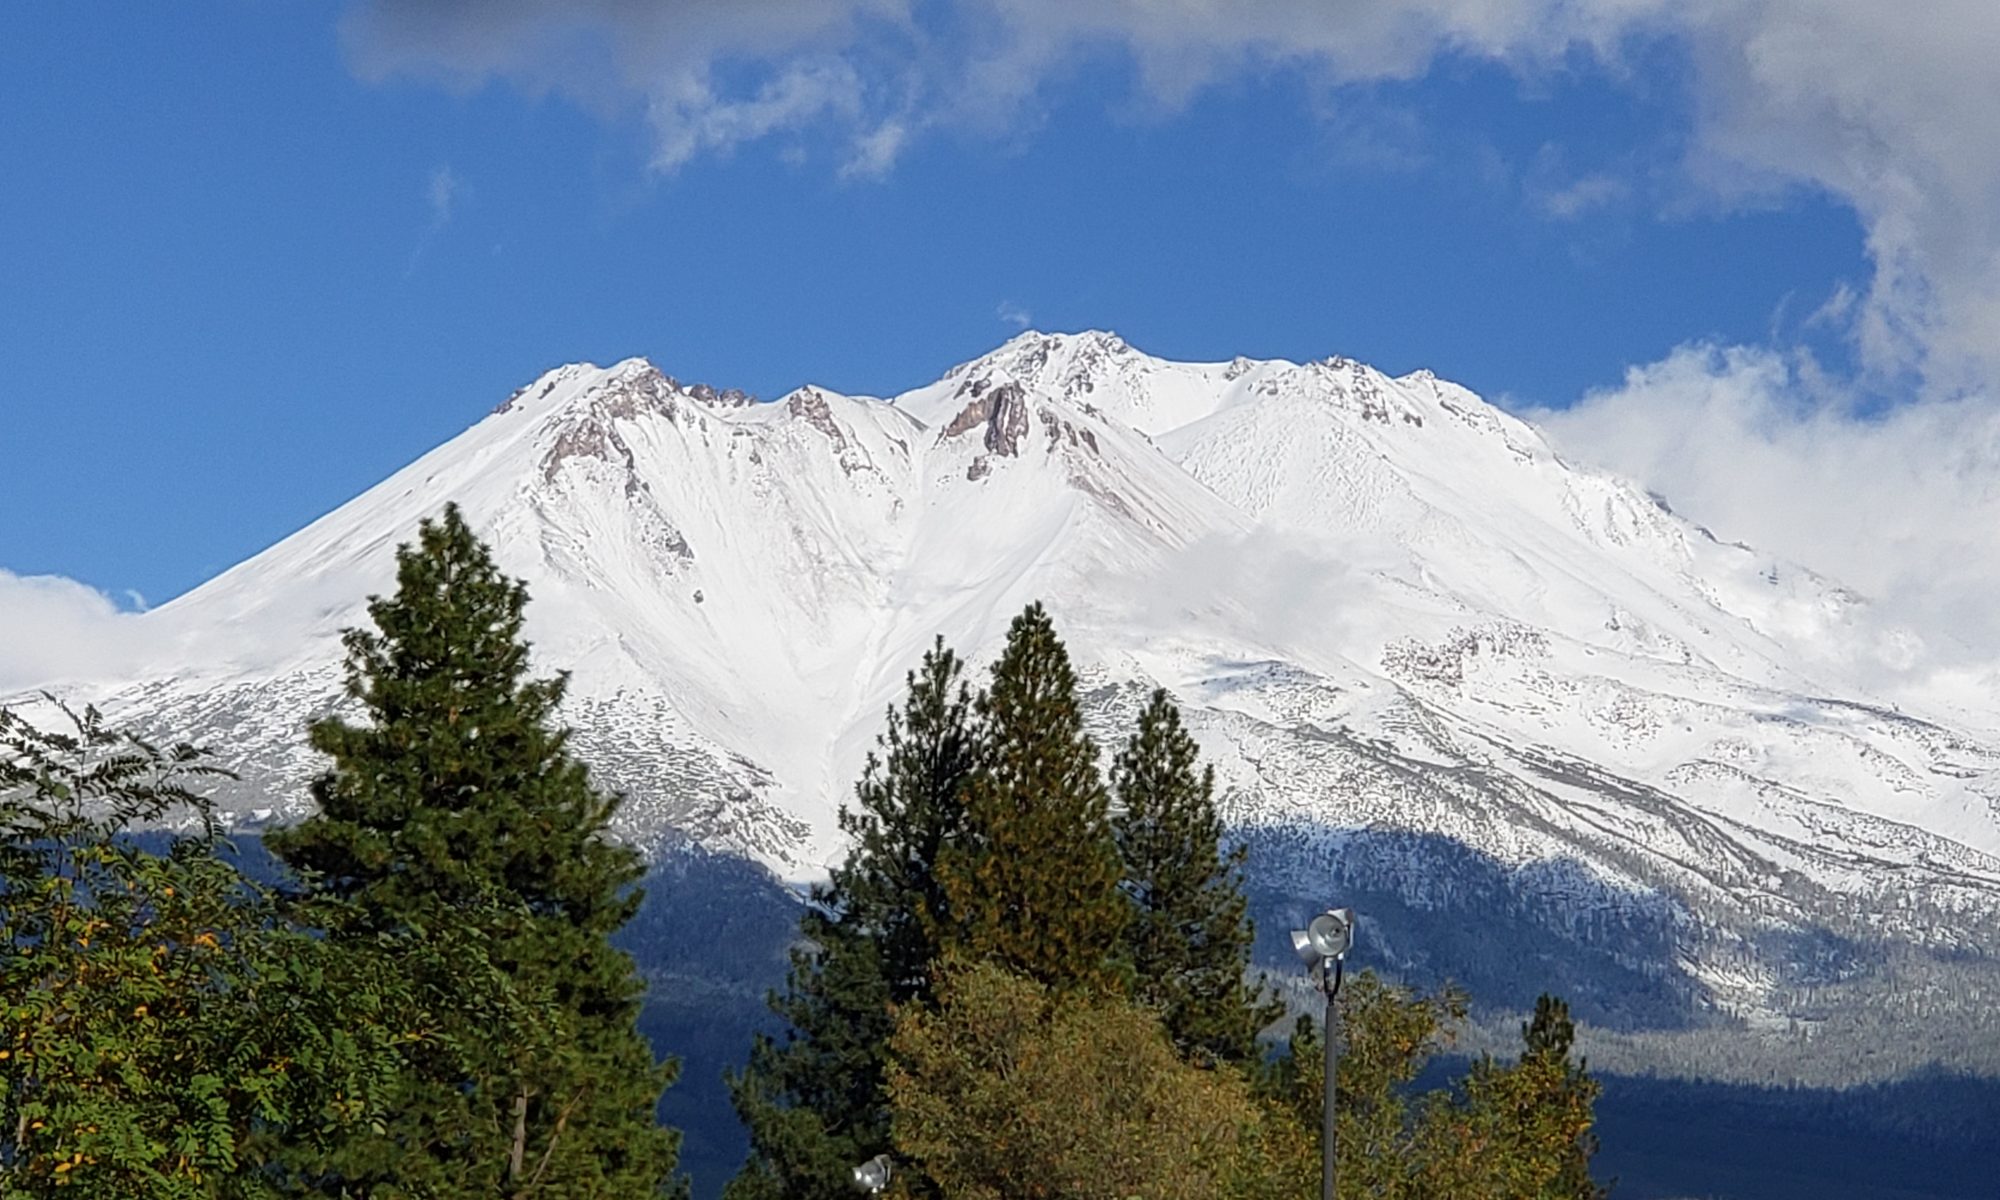 Richard-Uzelac-Mt-Shasta-snow-covered